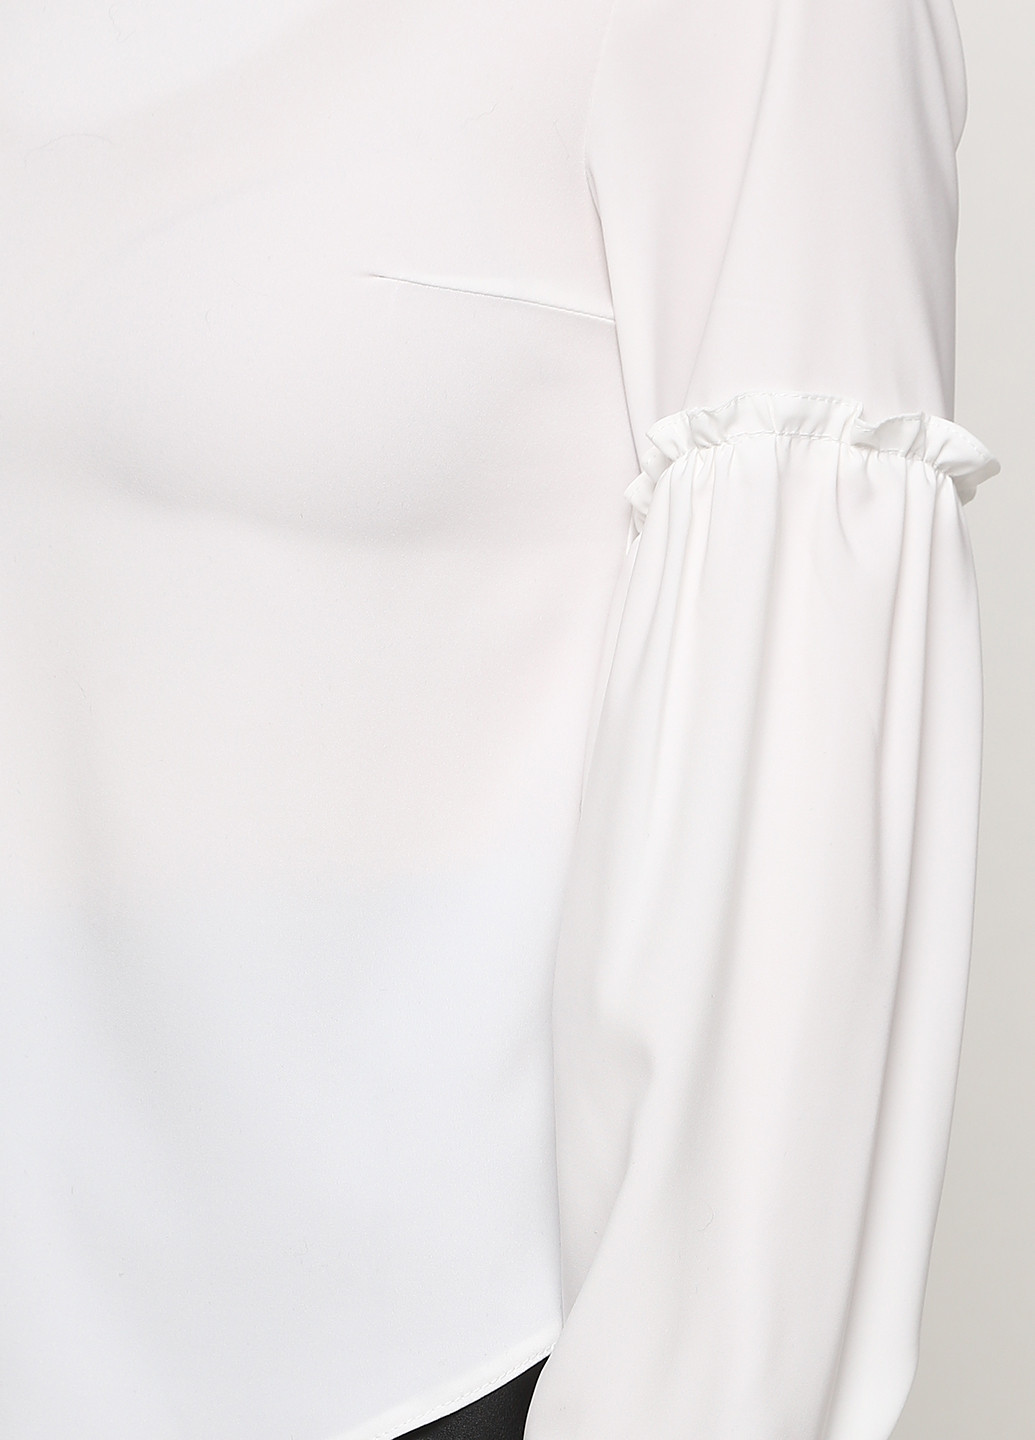 Біла демісезонна блуза ZUBRYTSKAYA